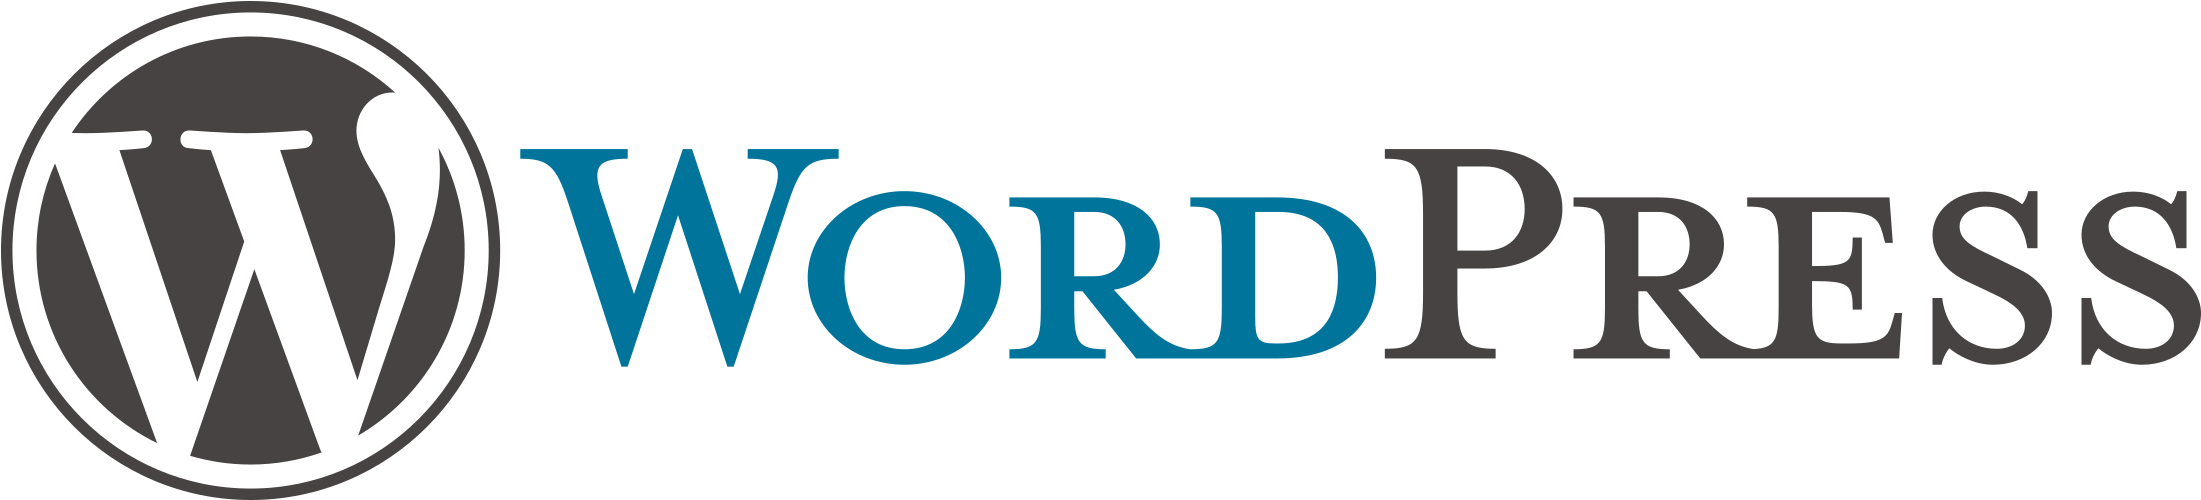 Word Press Logo Blue Gray PNG image